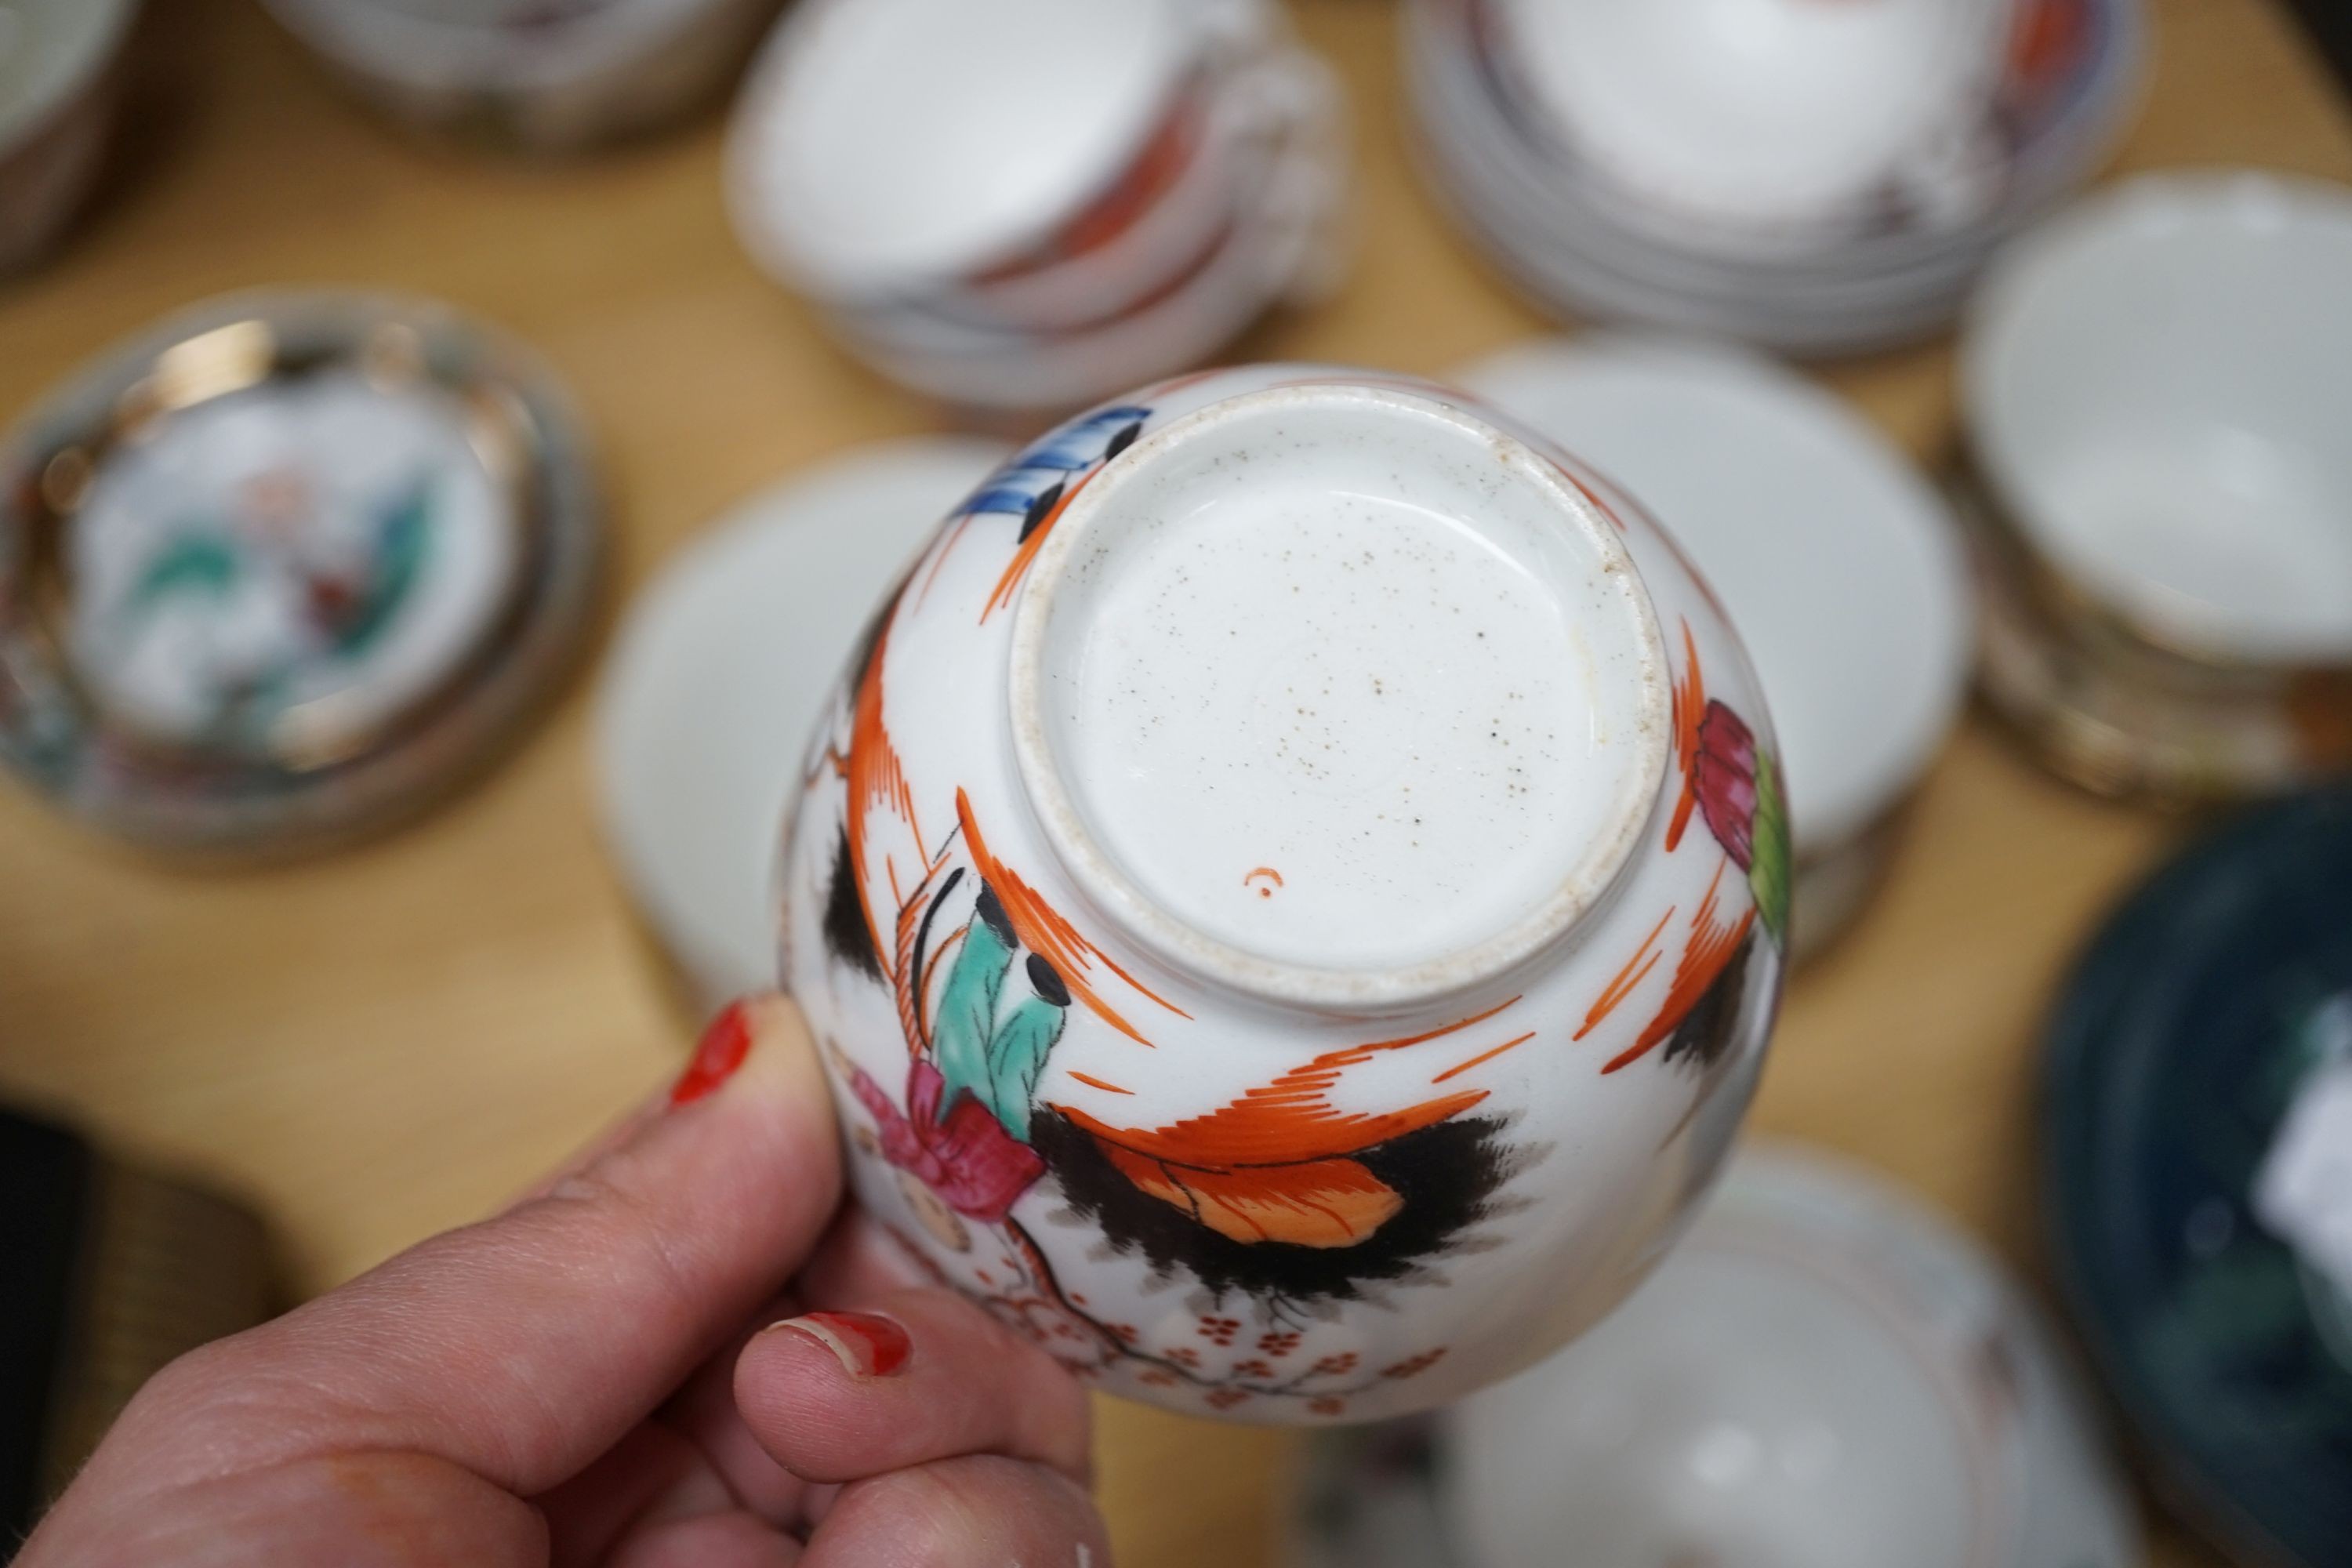 A mixed group pf Chinese, Japanese and English ceramics